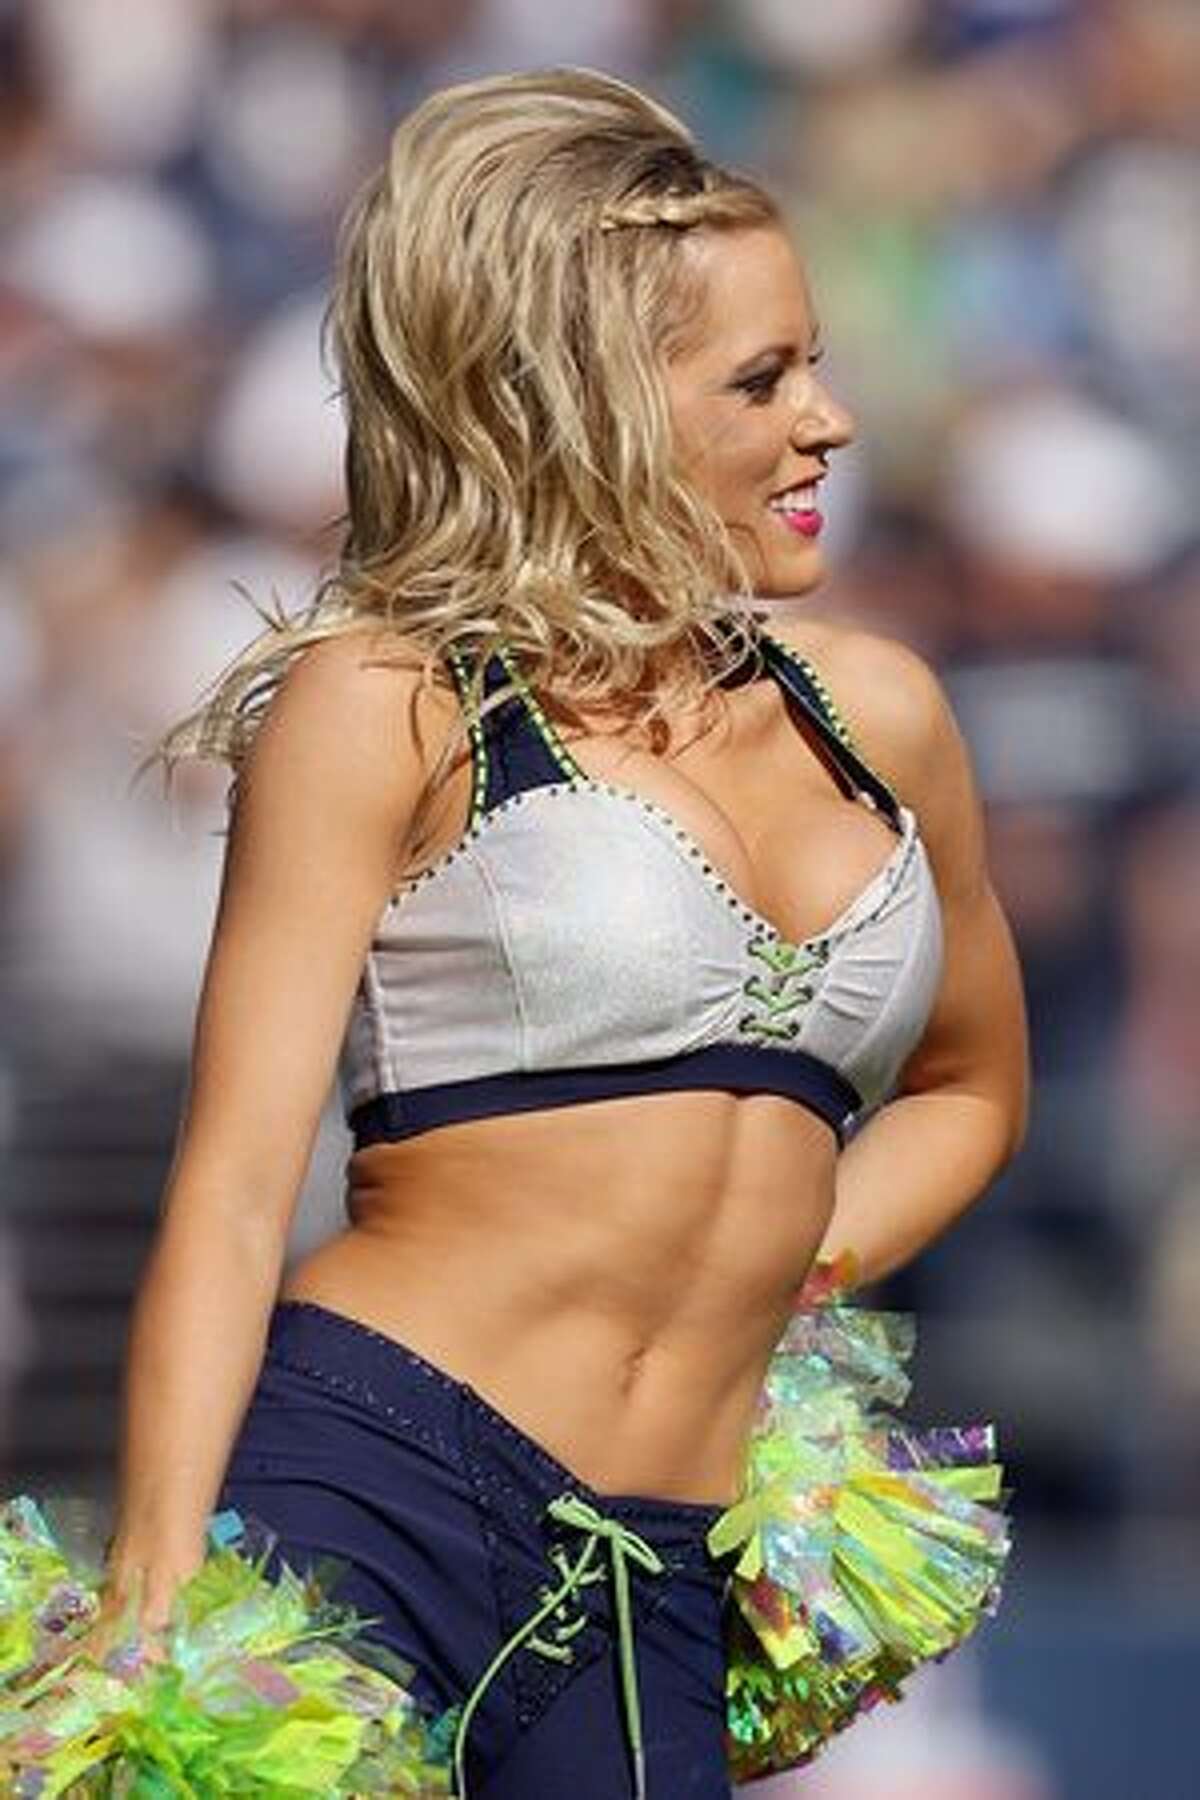 A Sea Gal cheerleader of the Seattle Seahawks.